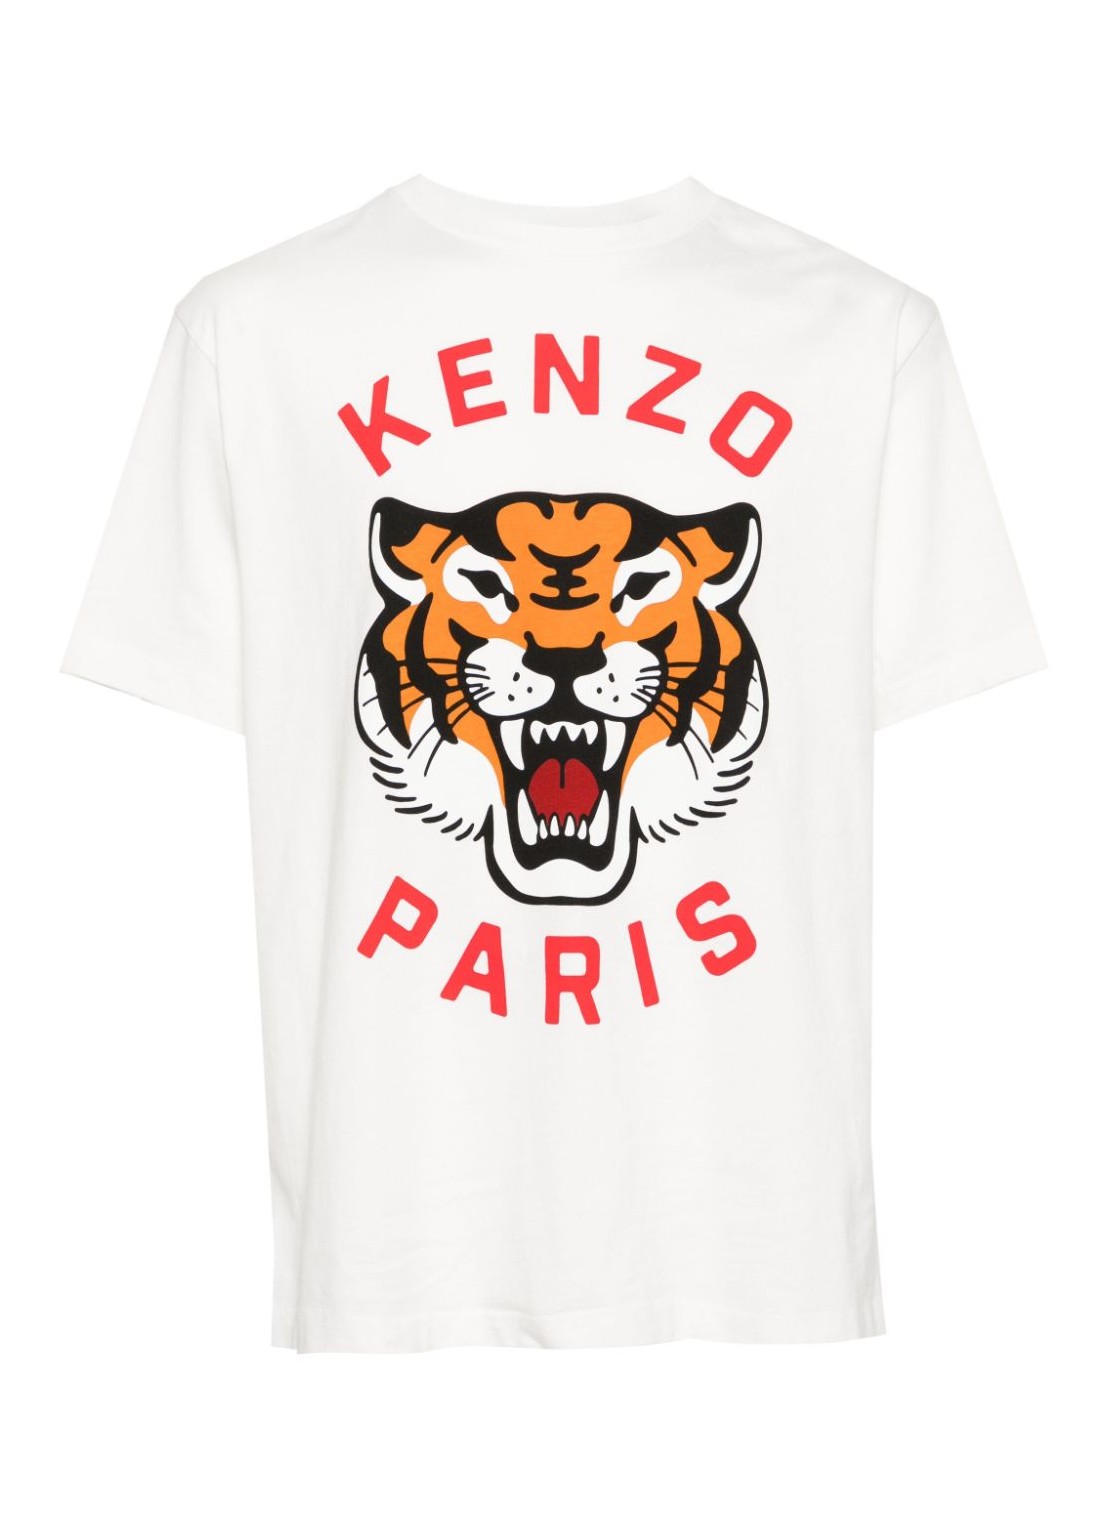 Top kenzo top woman t-shirt fe58ts0064sg 02 talla XXS
 